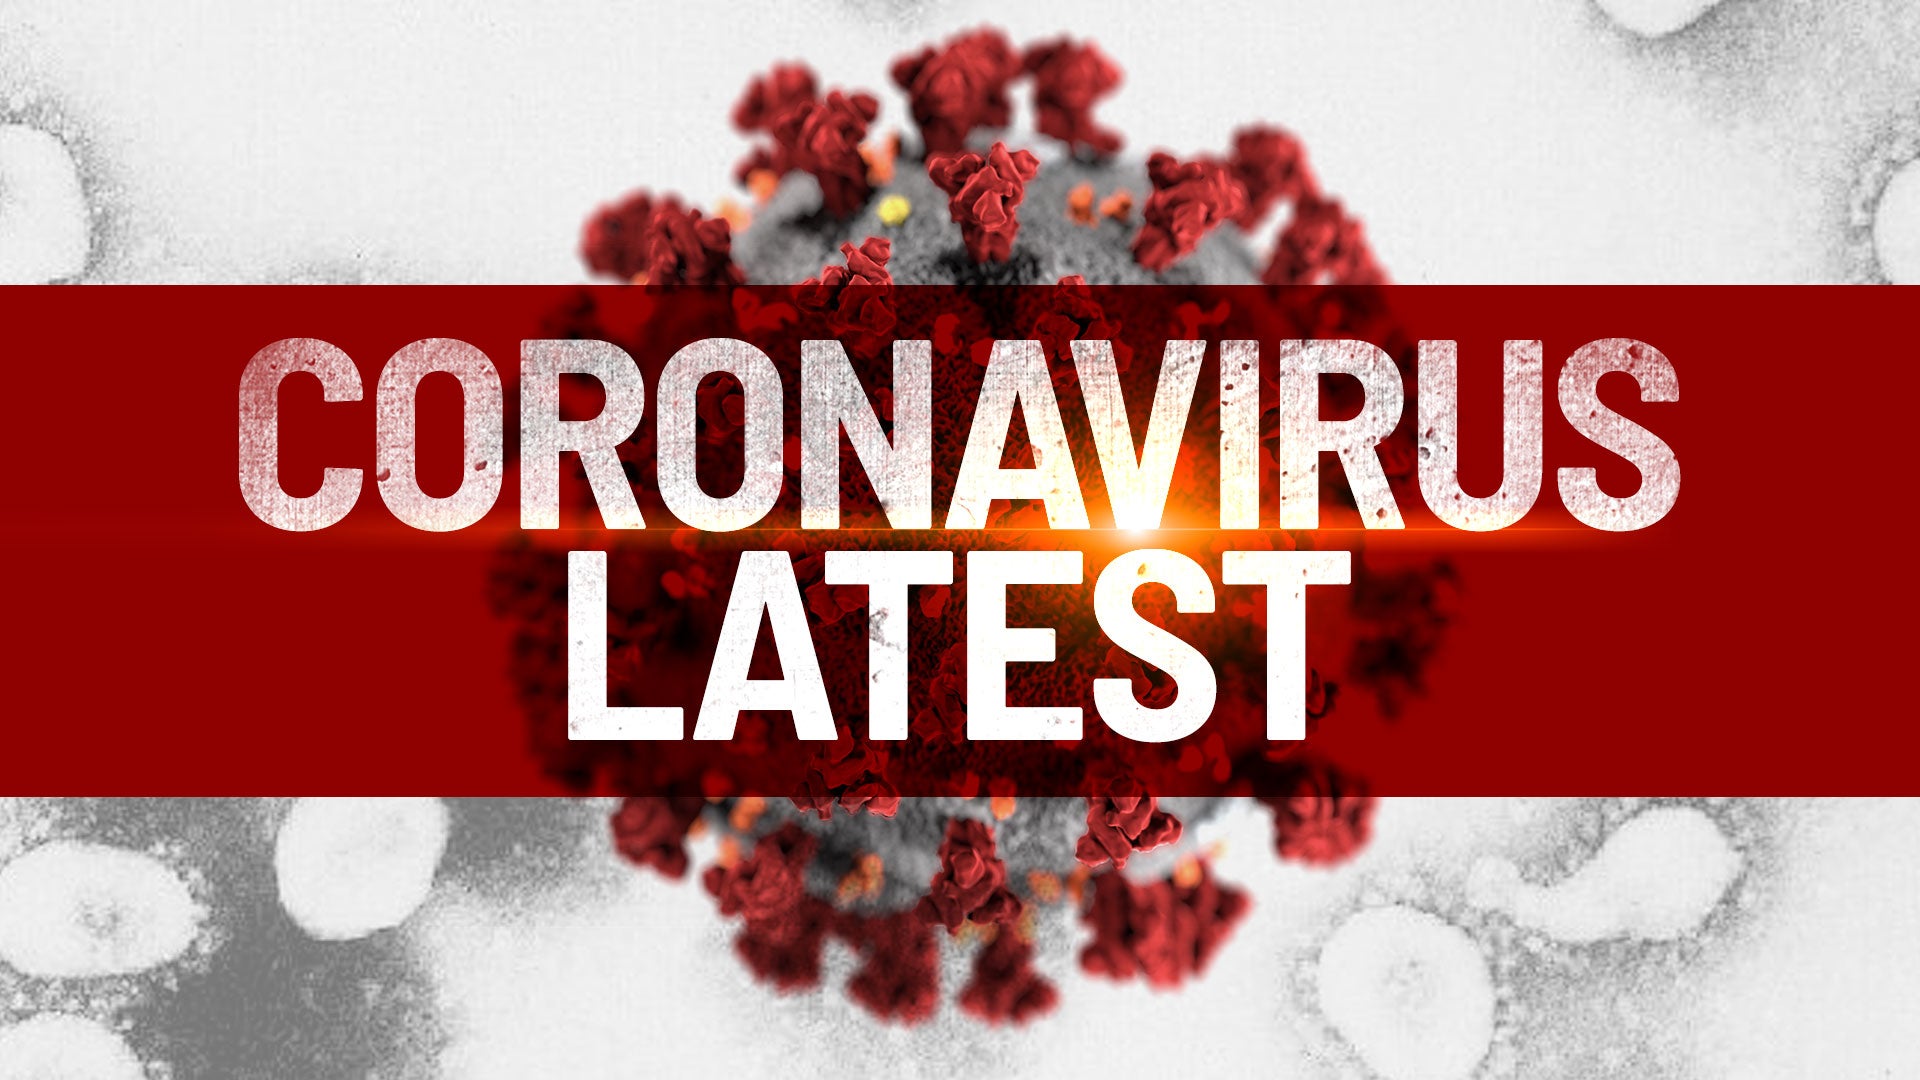 coronavirus lates 1920x1080 1